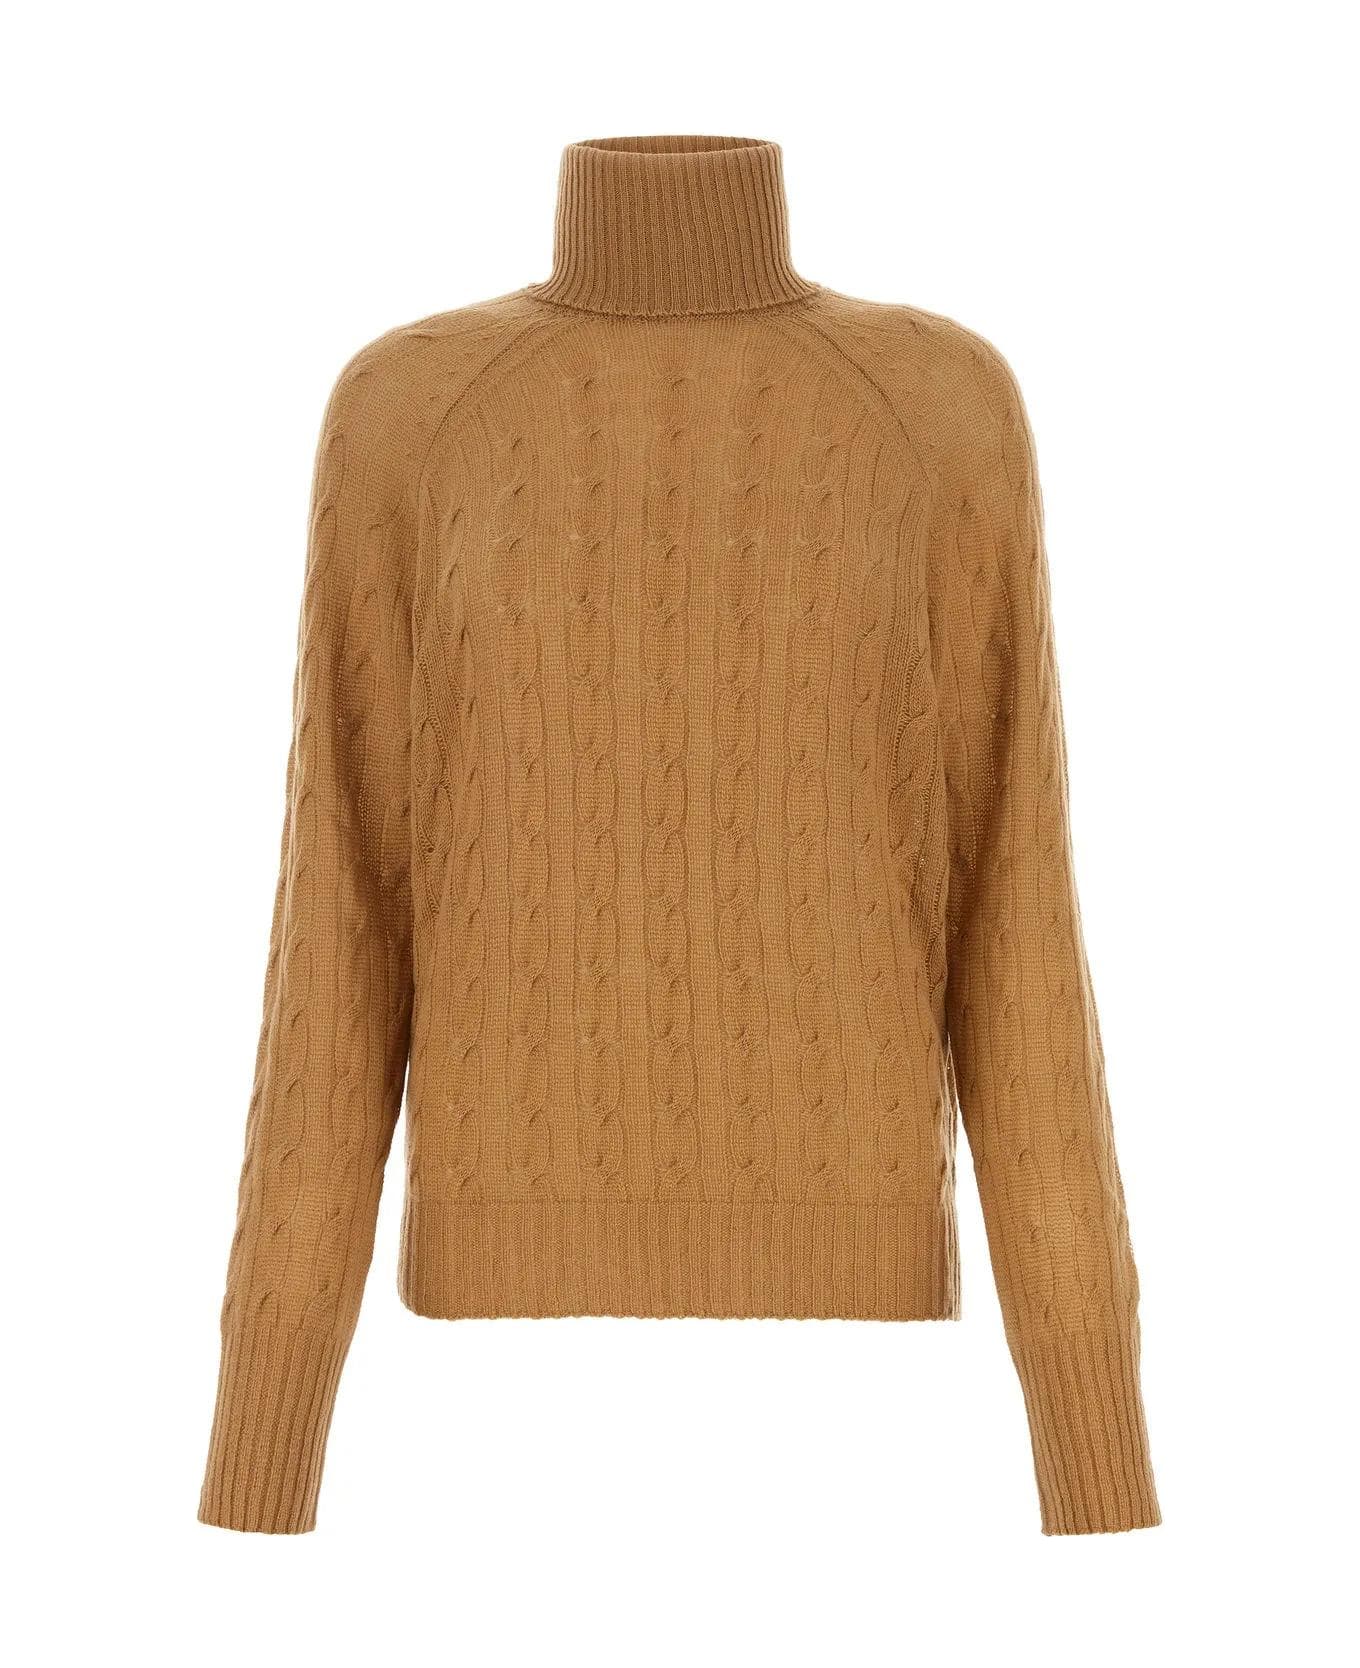 Etro Biscuit Cashmere Sweater - BROWN ニットウェア